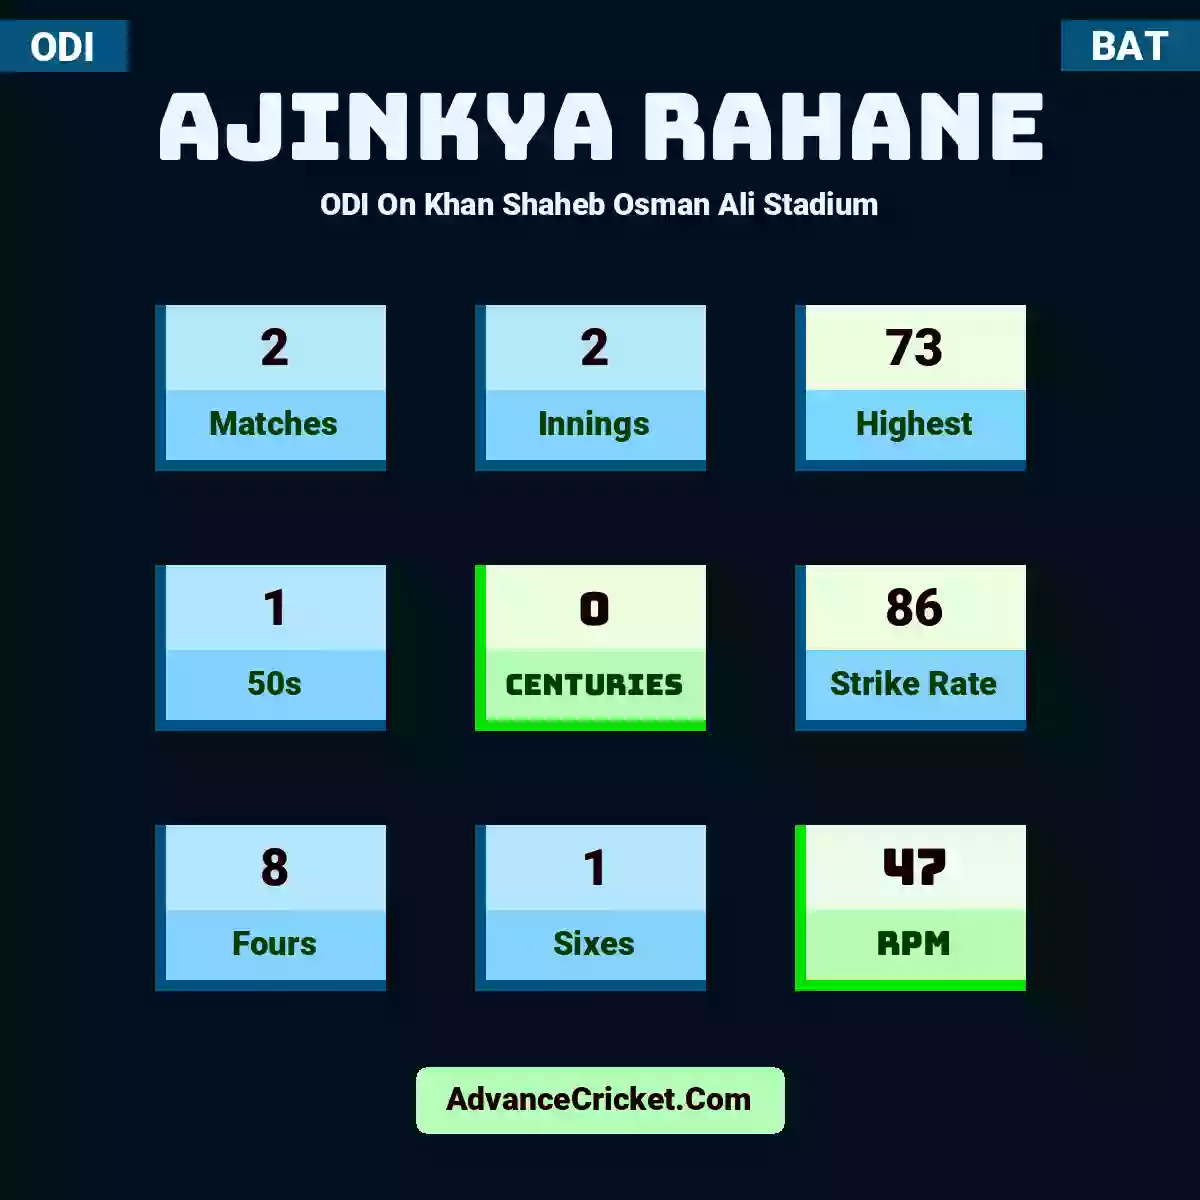 Ajinkya Rahane ODI  On Khan Shaheb Osman Ali Stadium, Ajinkya Rahane played 2 matches, scored 73 runs as highest, 1 half-centuries, and 0 centuries, with a strike rate of 86. A.Rahane hit 8 fours and 1 sixes, with an RPM of 47.